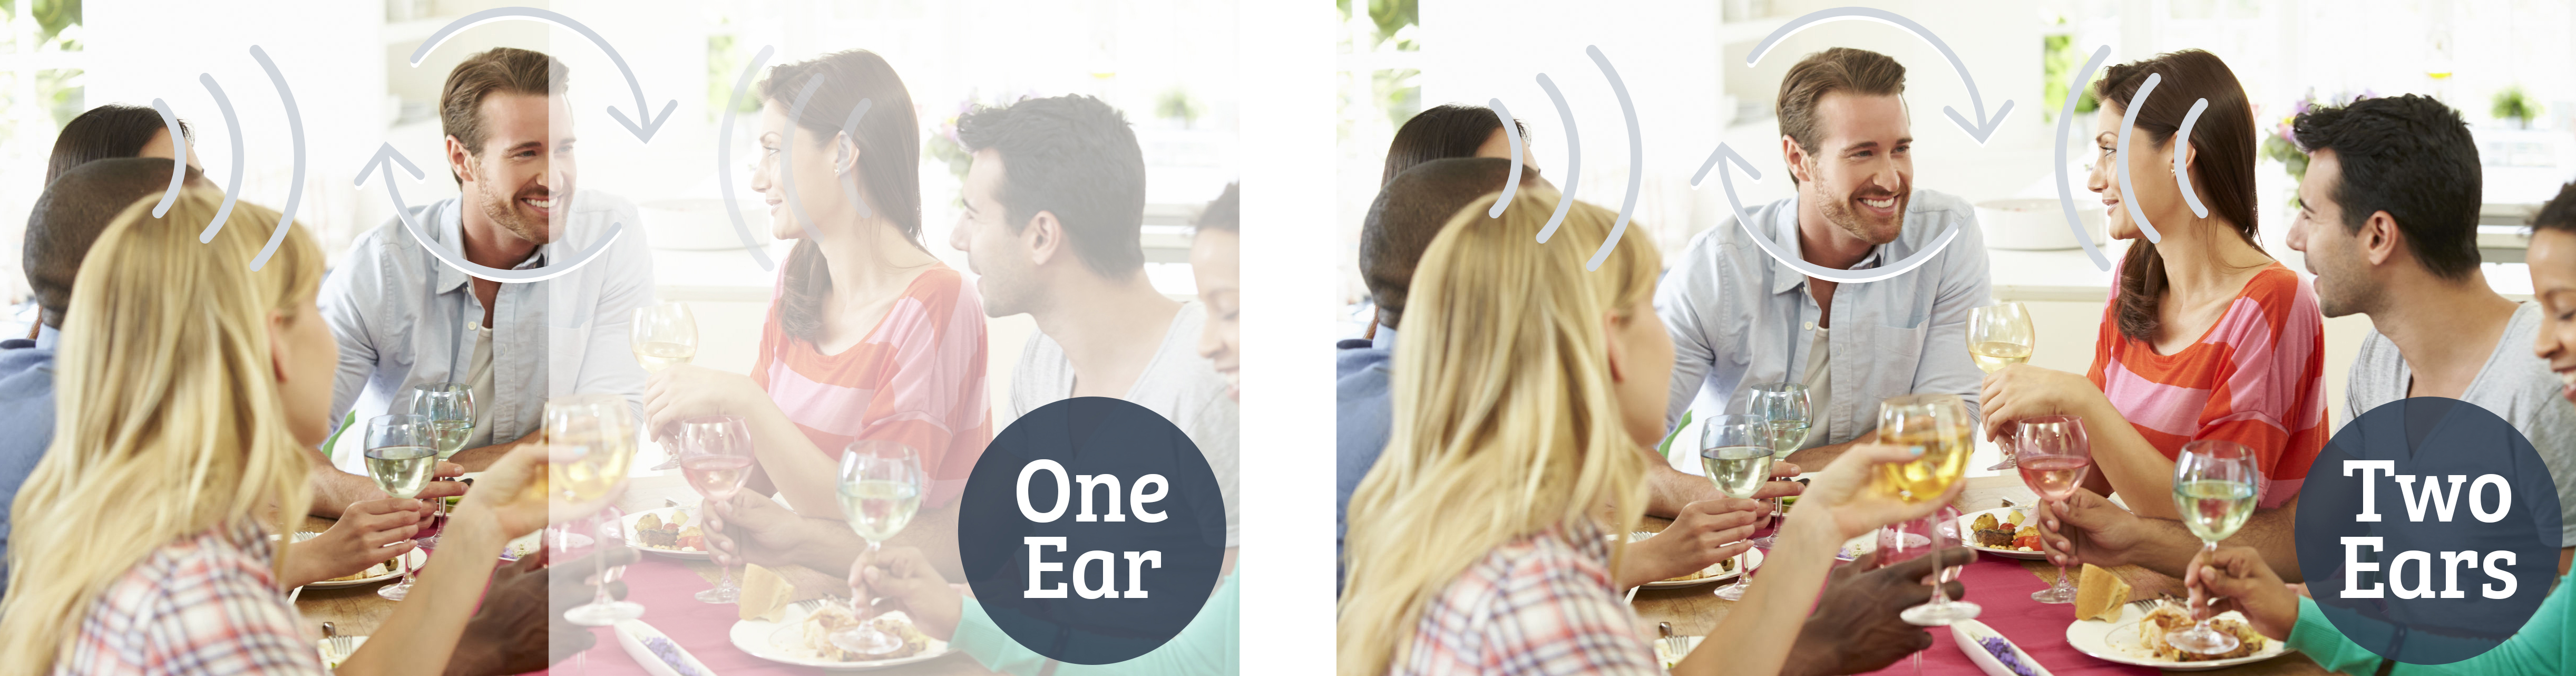 One Ear Versus Two Ears